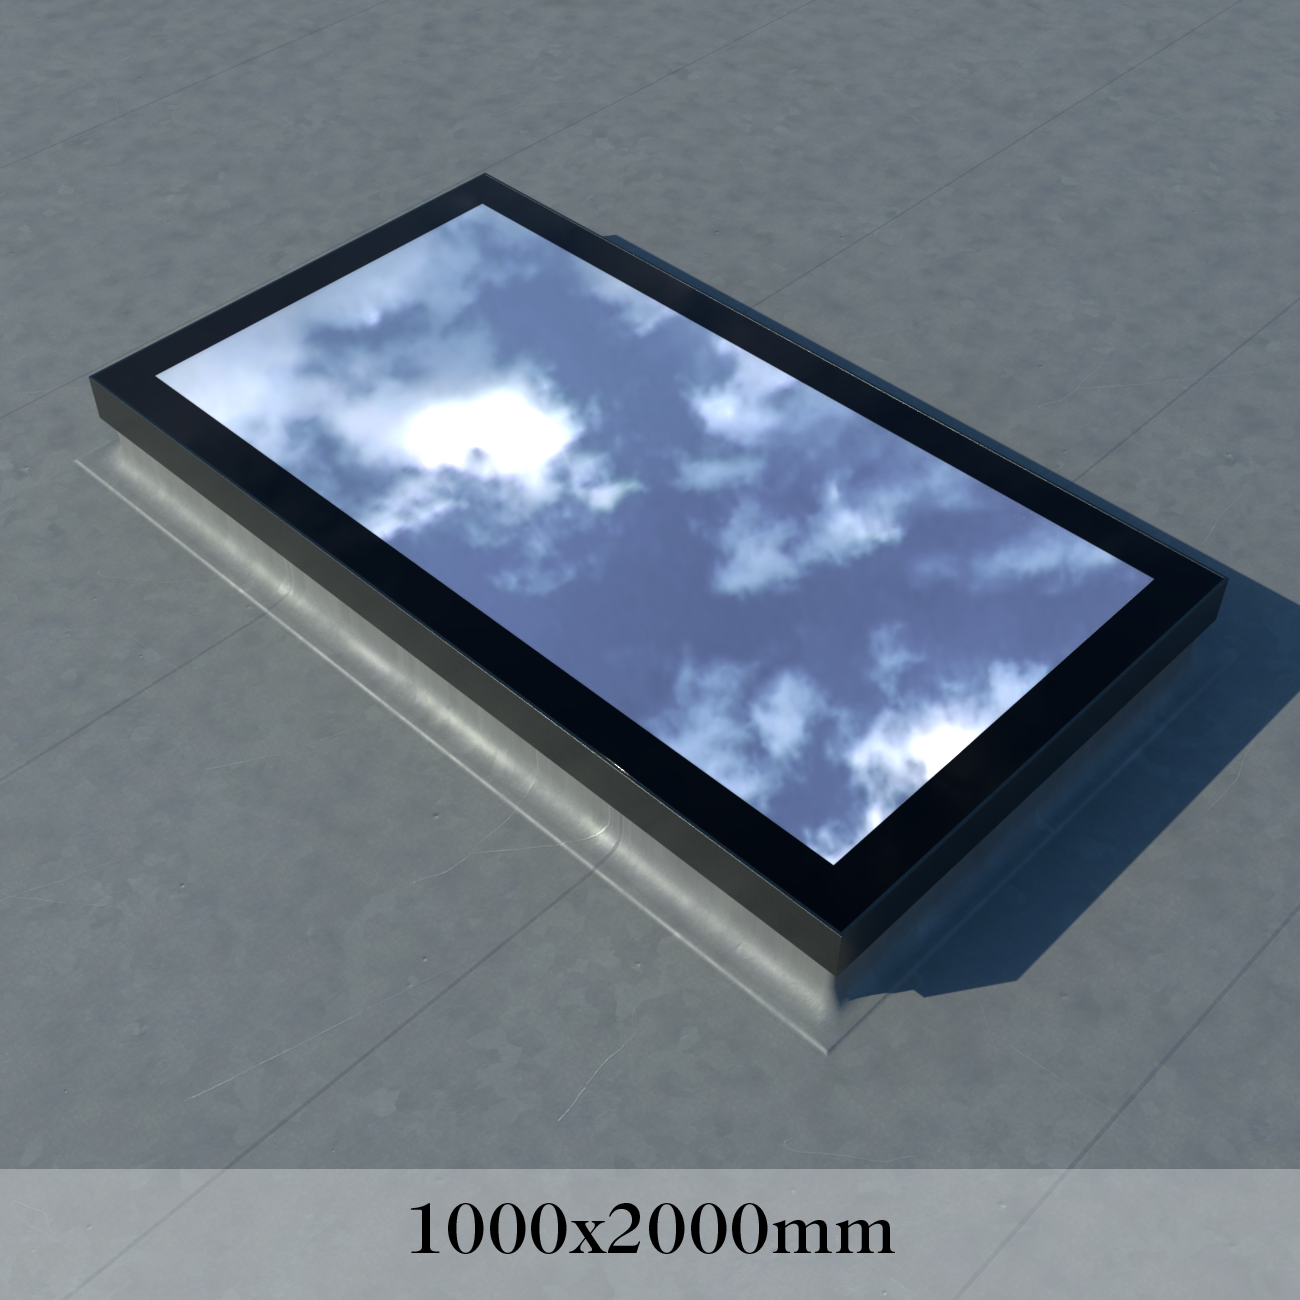 Framed Skylight 1000 x 2000 mm – Triple glazed